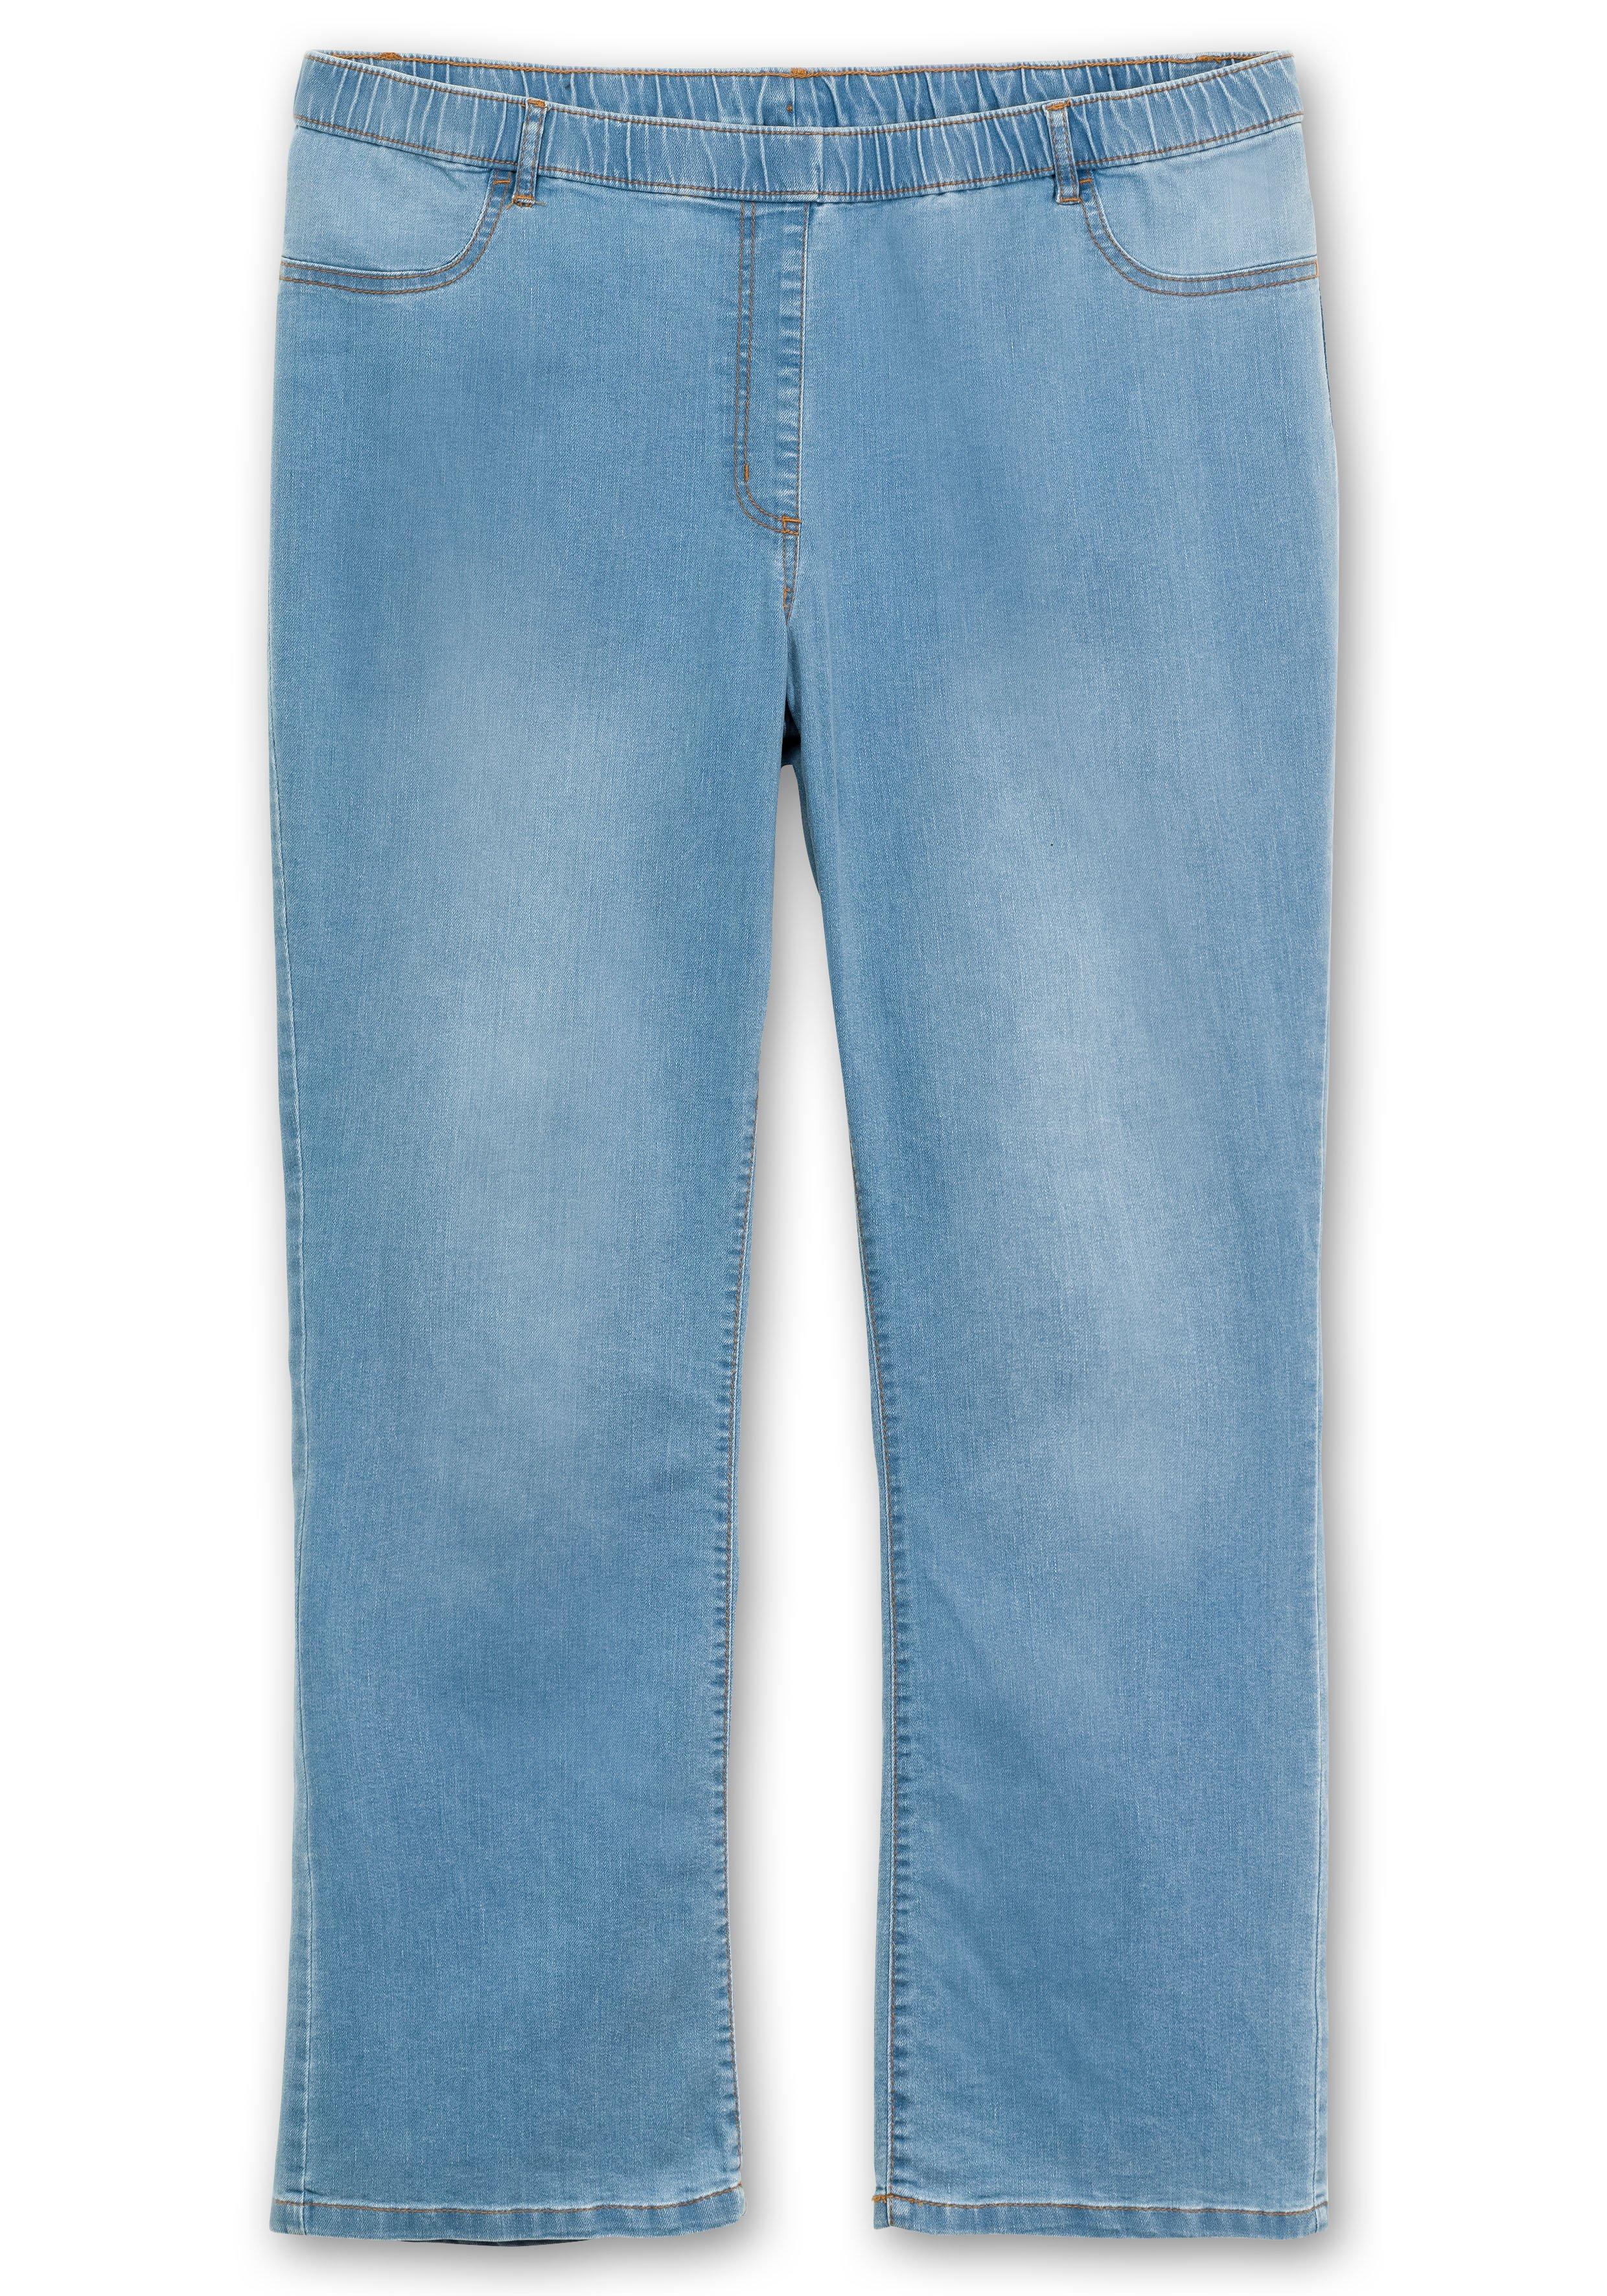 Gerade Jeans im extrahohen light blue sheego Paperbag-Schnitt - | Denim